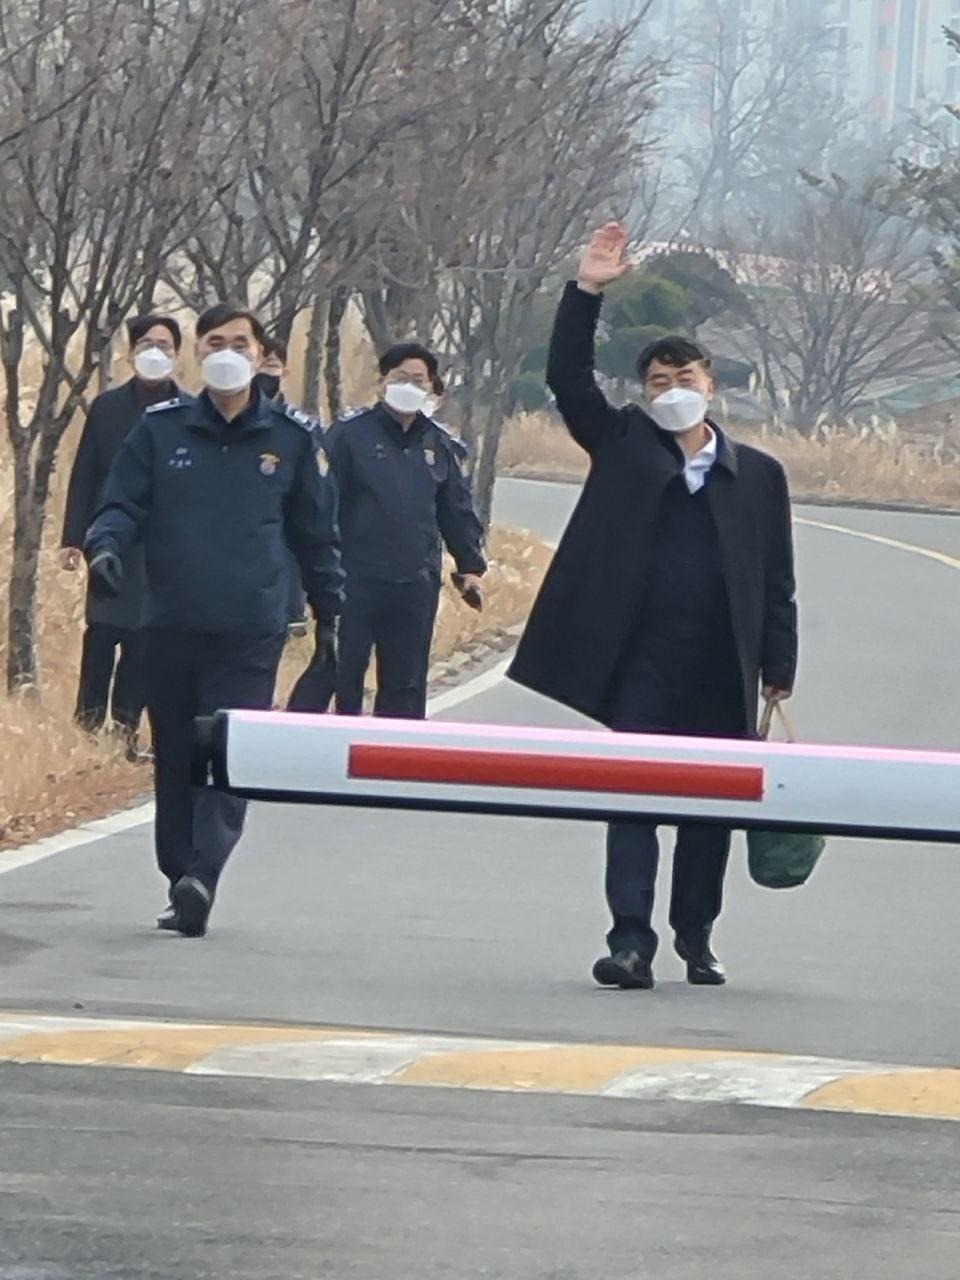 Lee being released, raising his arm in greeting